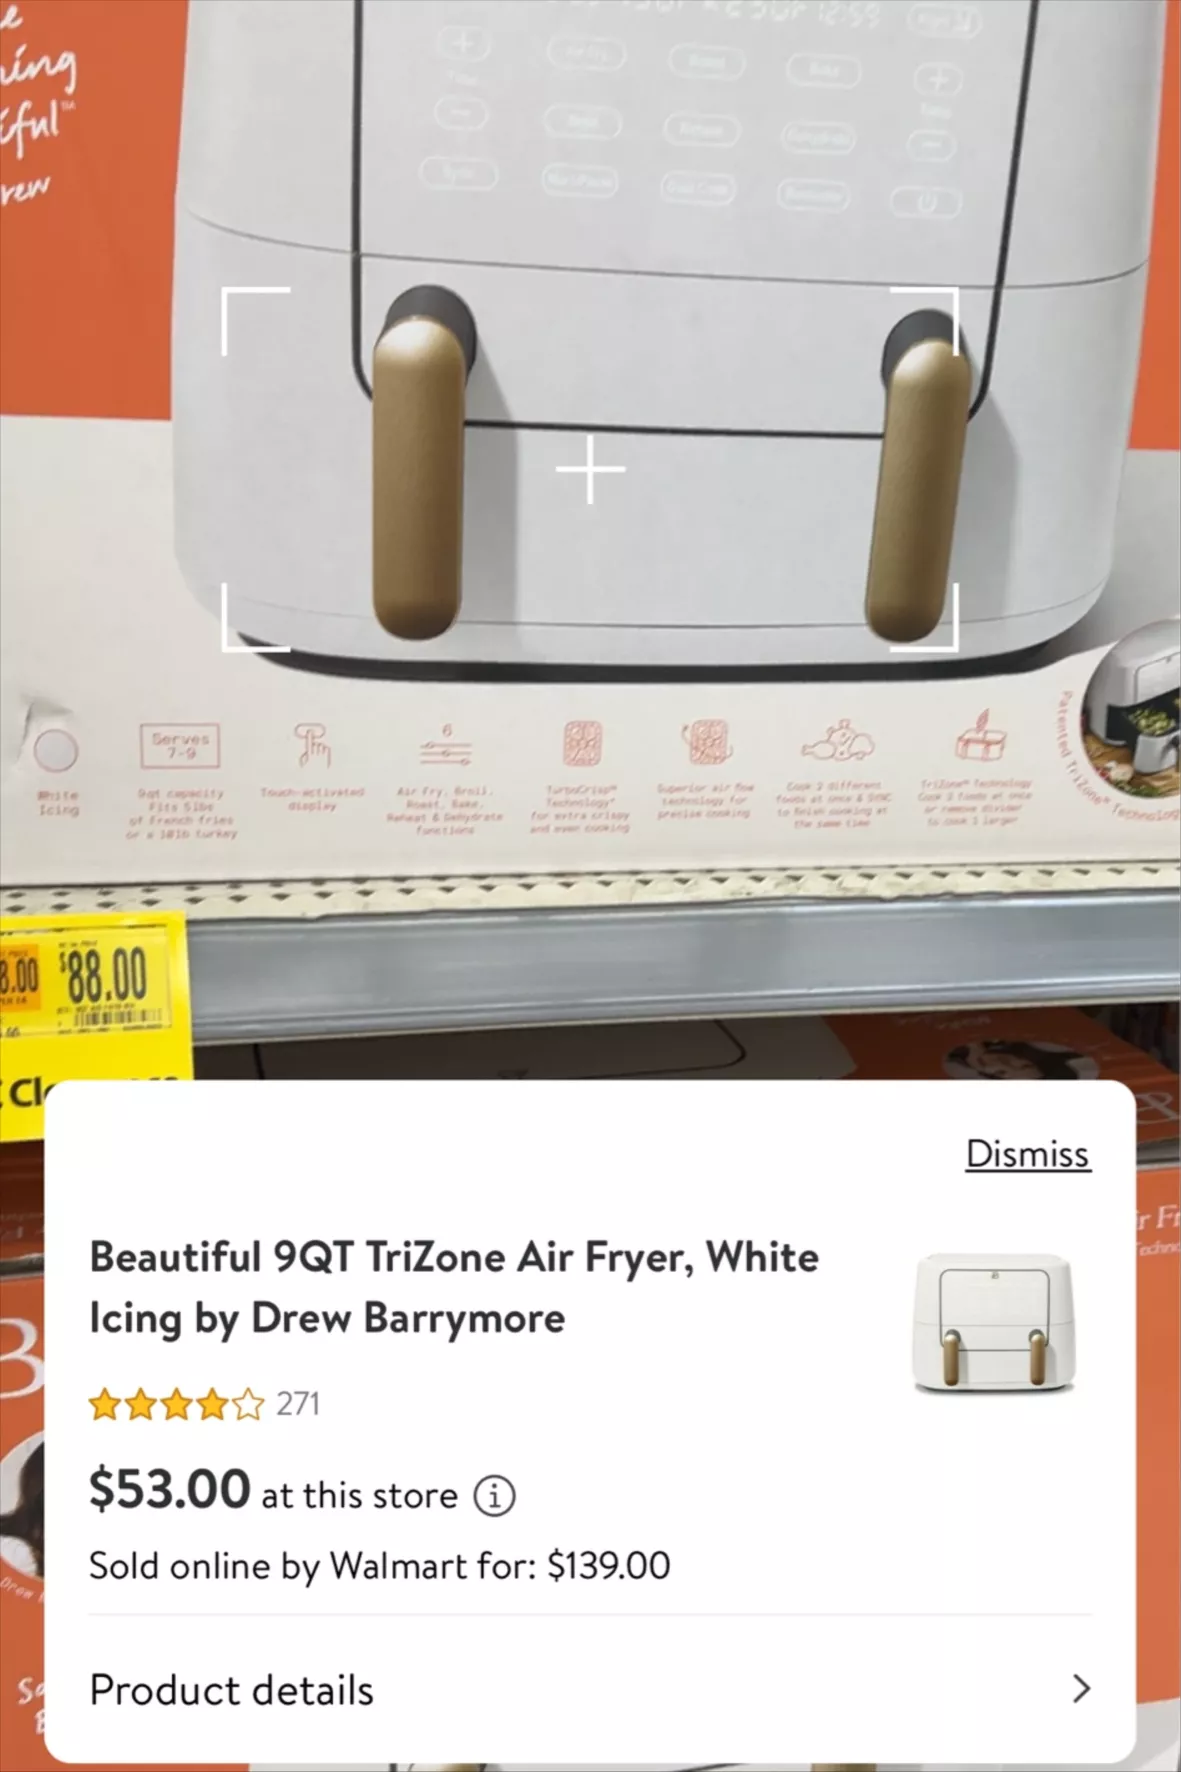  Beautiful 9QT TriZone Air Fryer, by Drew Barrymore